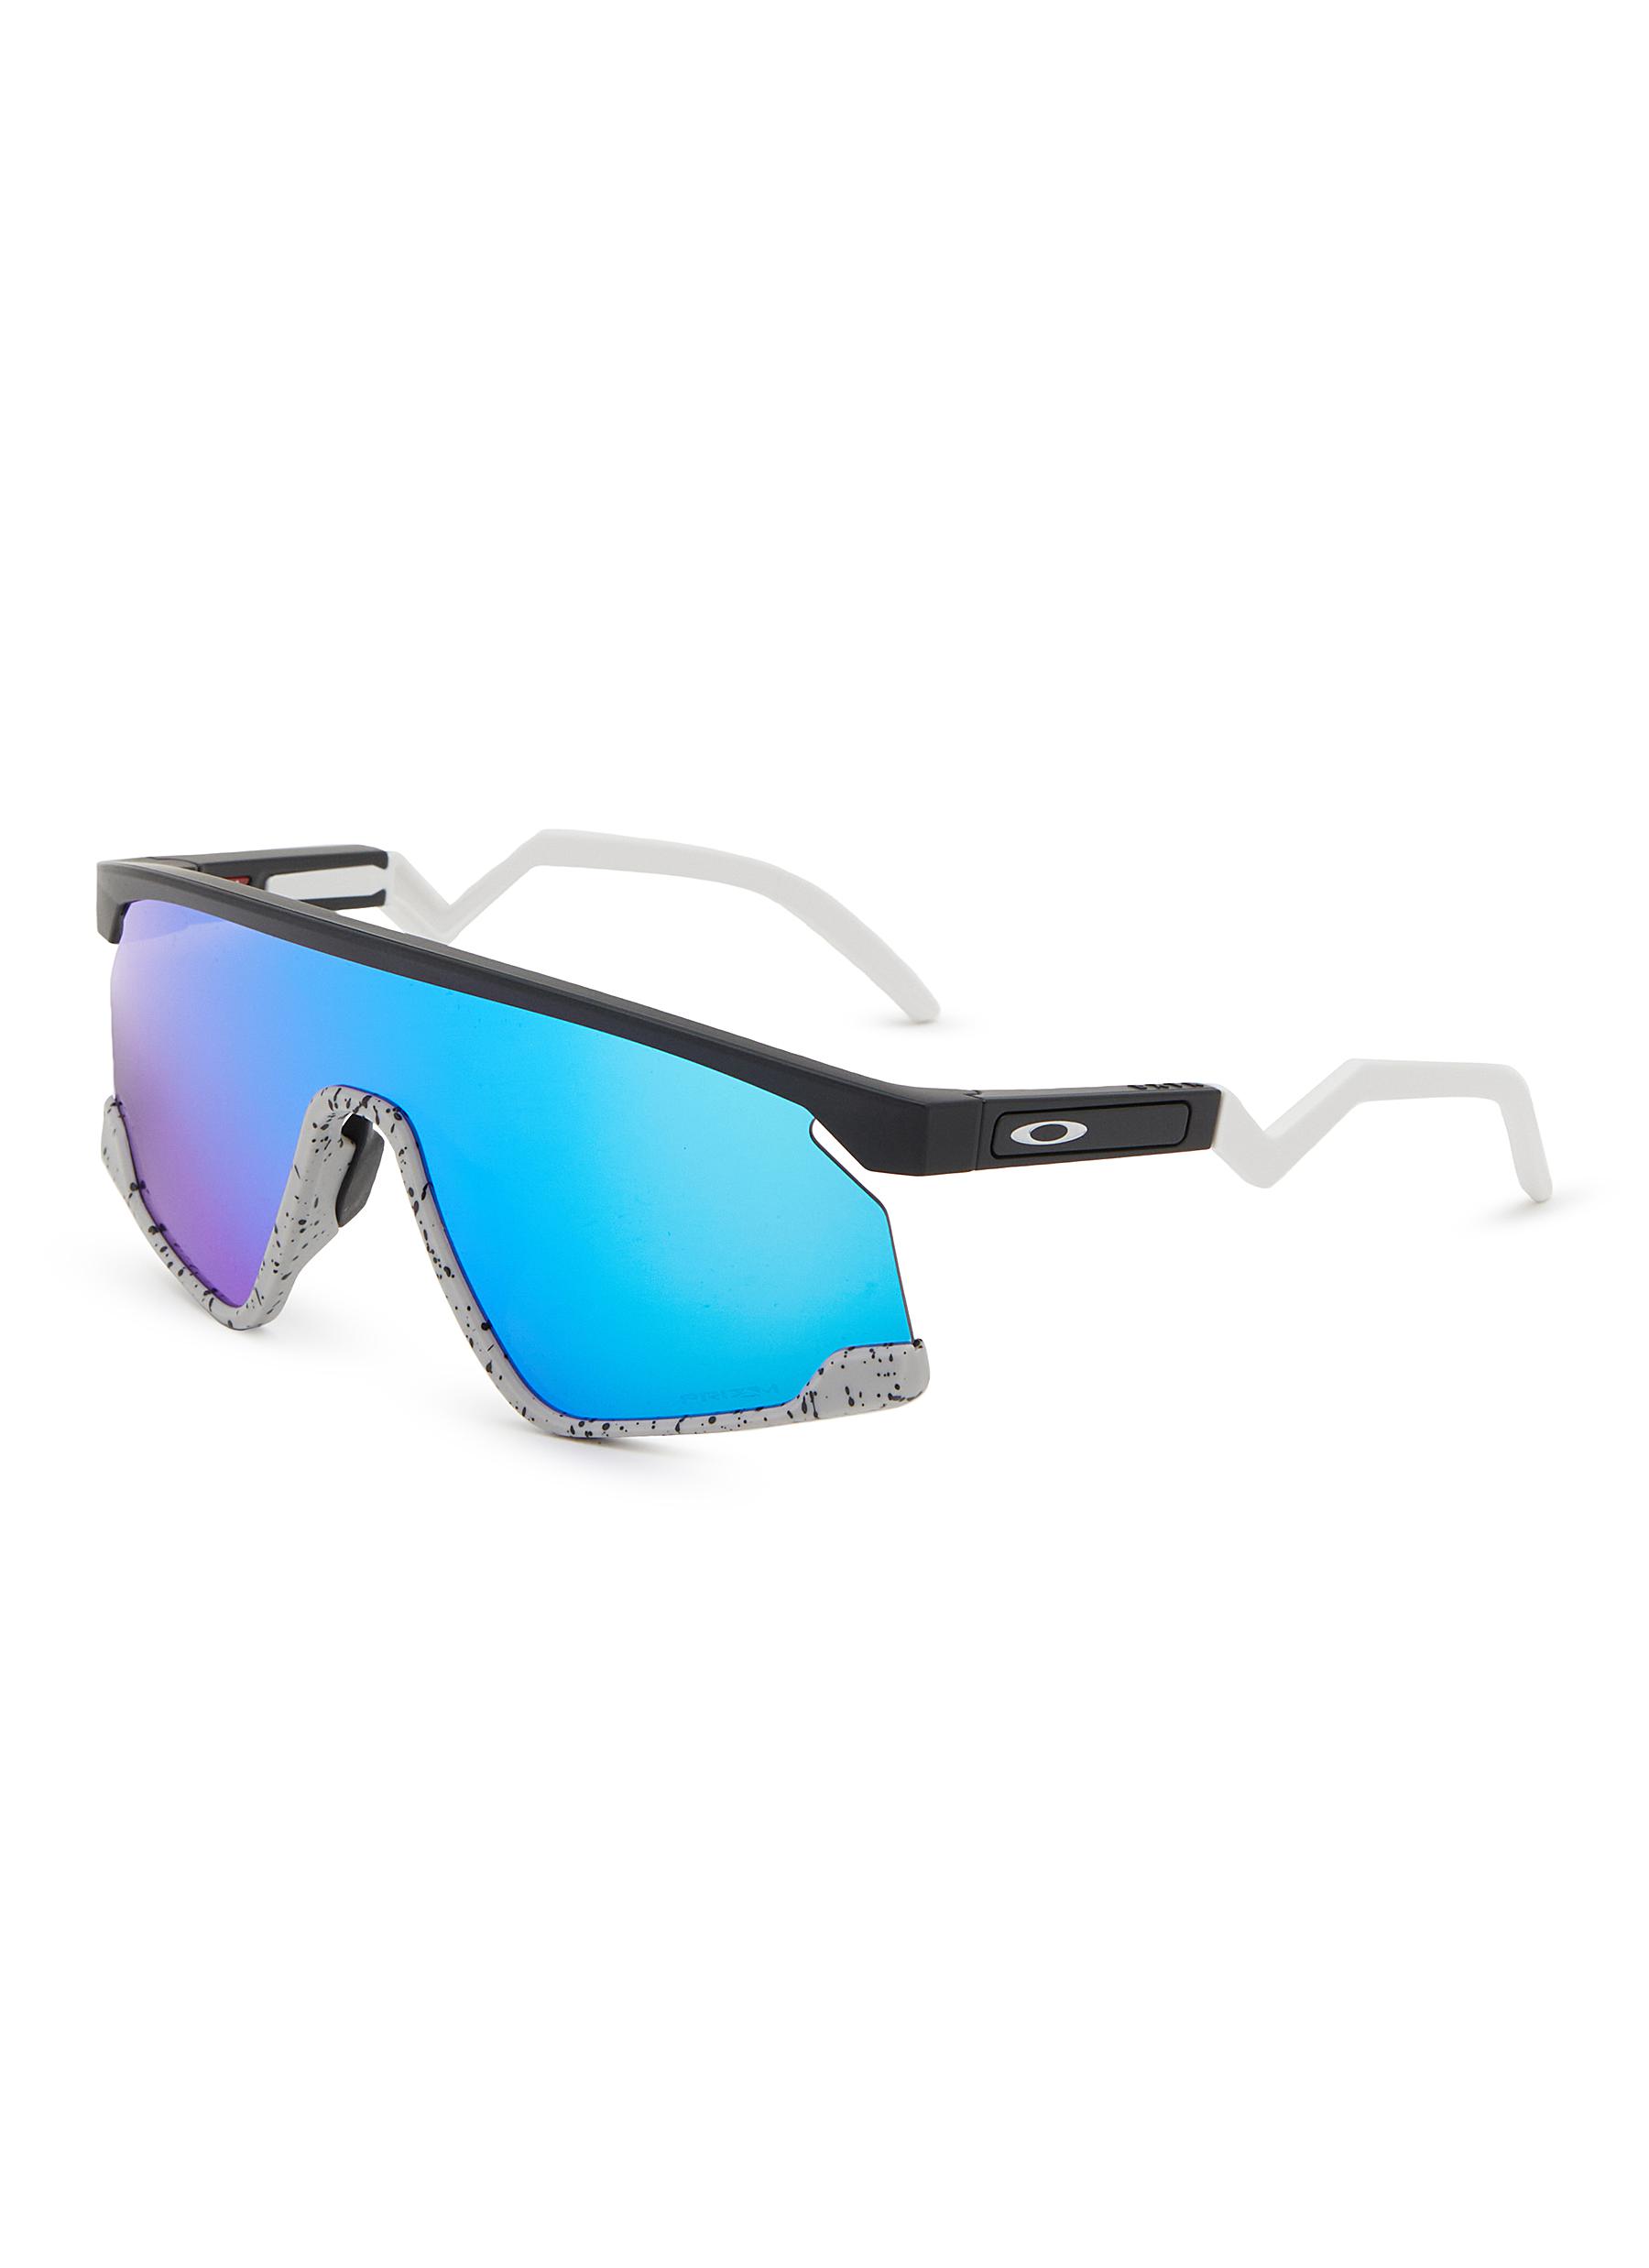 Oakley Inspired Men Style Sunglasses - Weekend Sunglasses